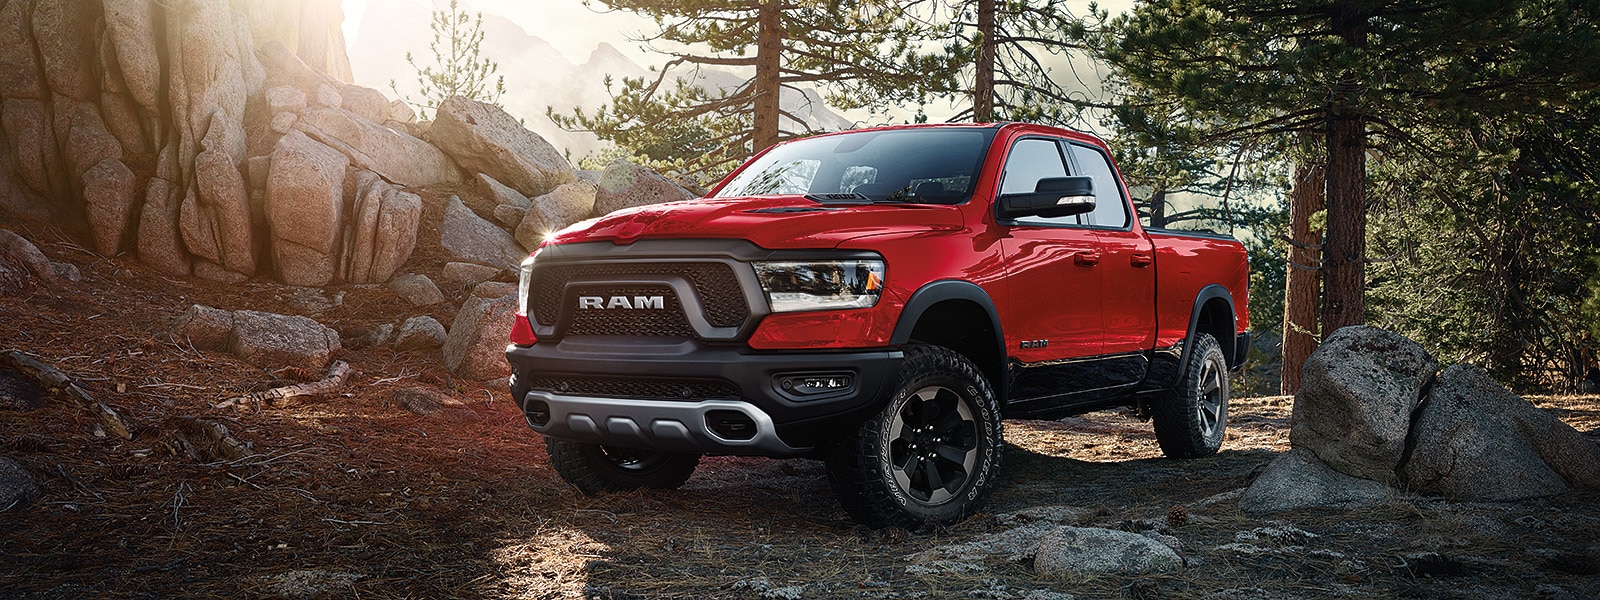 New Ram Trucks For Sale in Steubenville, OH: Sunset Motors